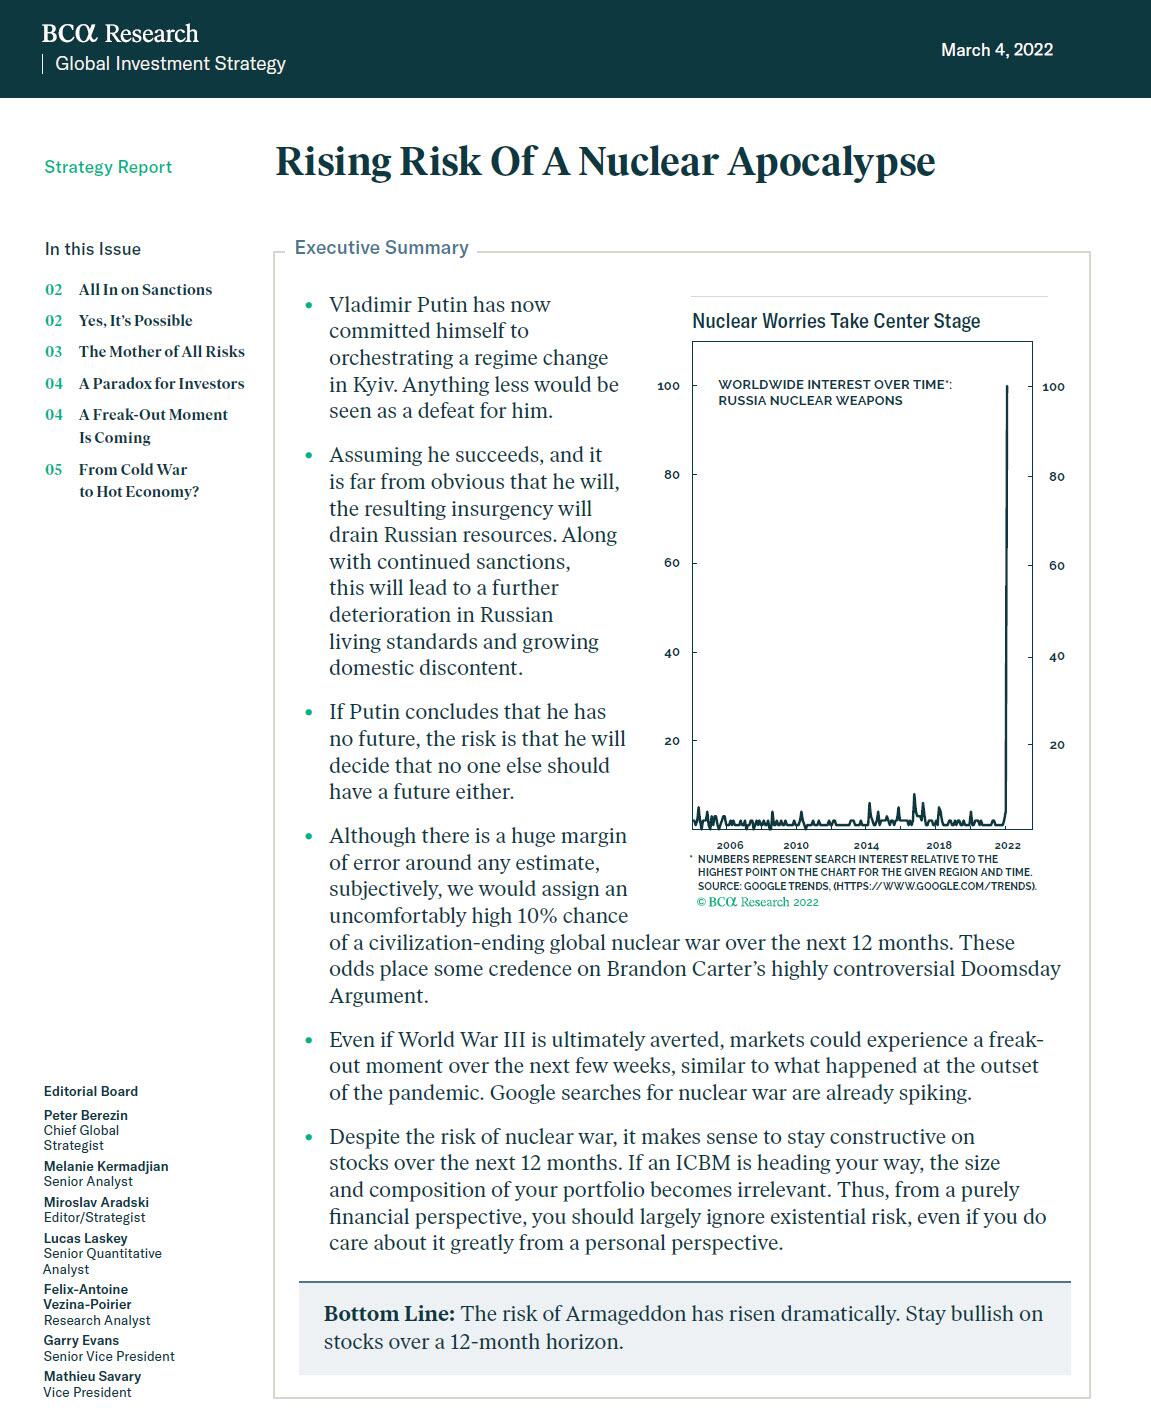 risking_sirk_of_nuclear_apocalypse.jpg